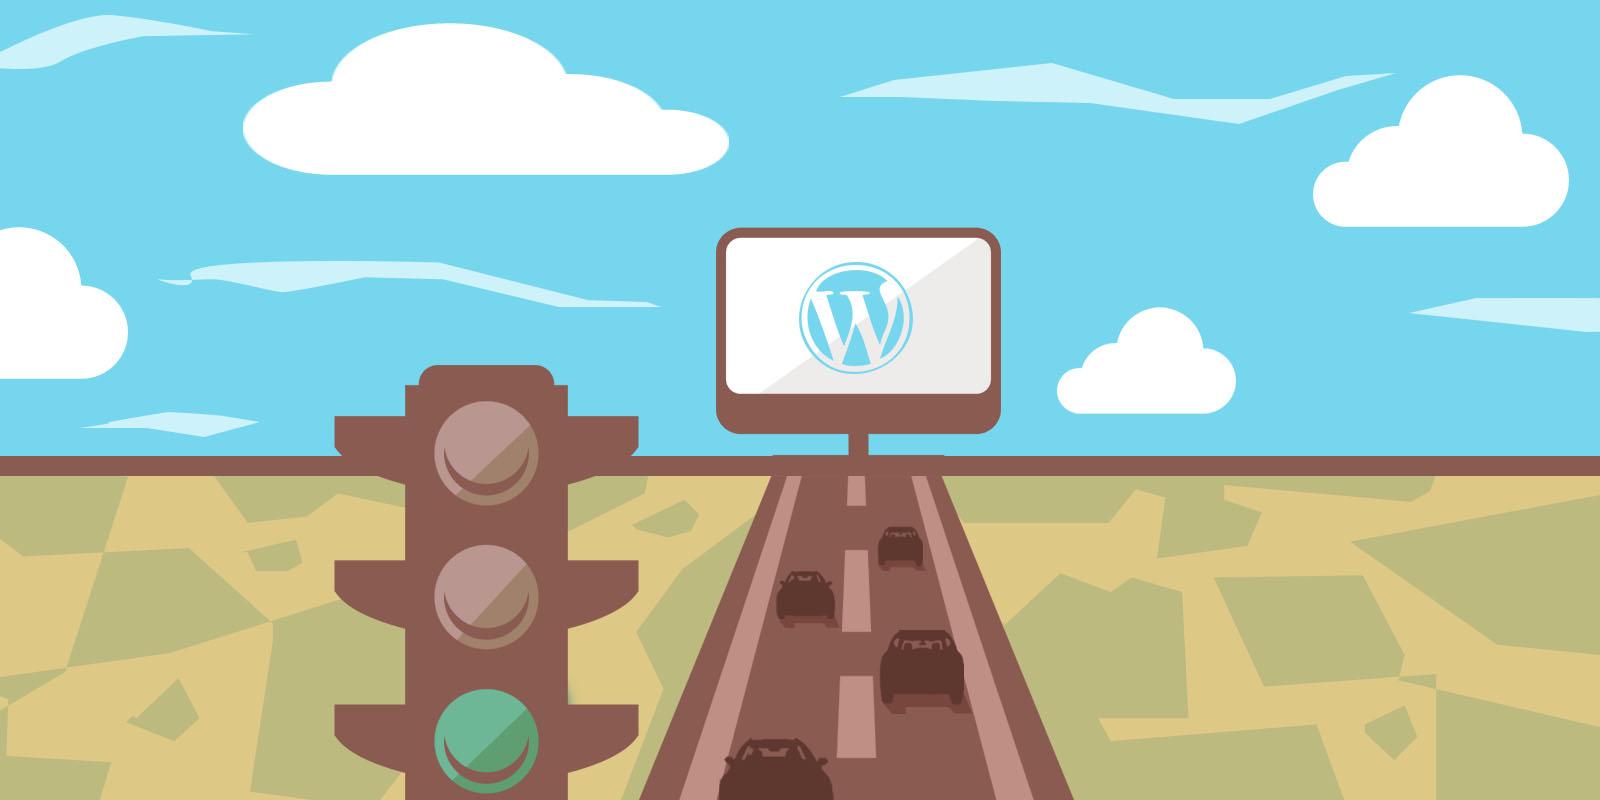 WordPress Getting More Traffic